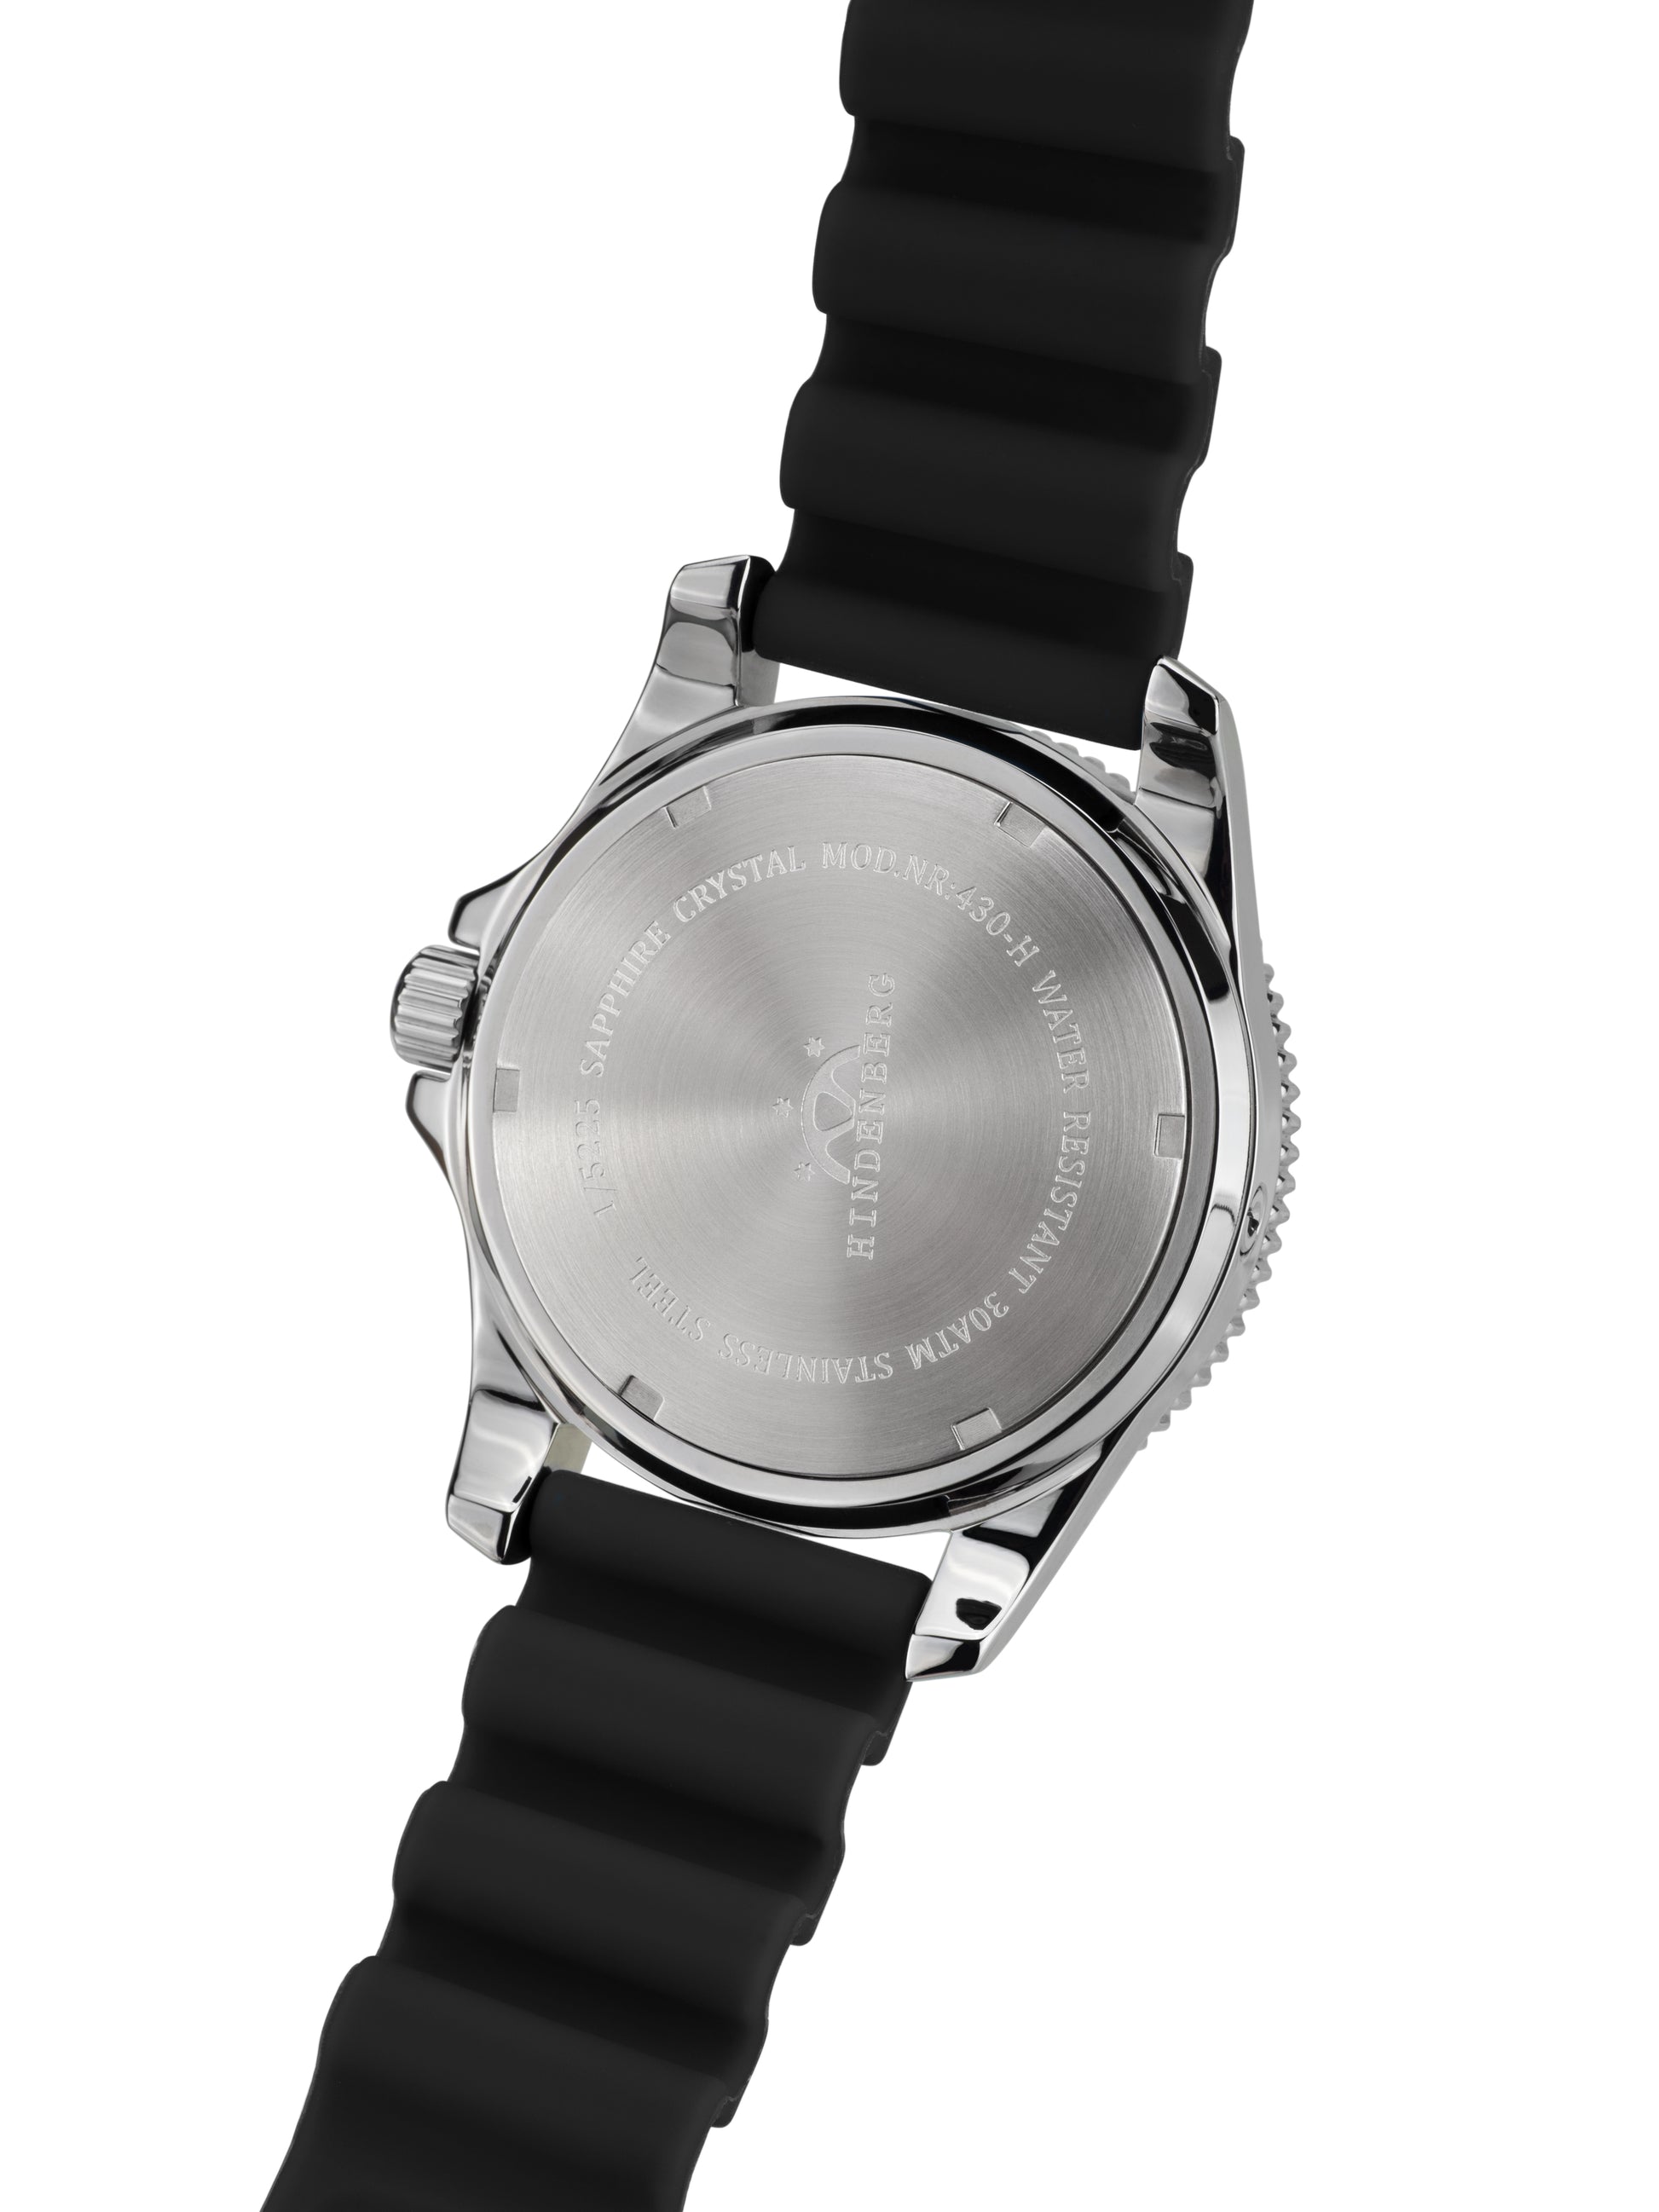 Automatic watches — Diver Professional — Hindenberg — schwarz